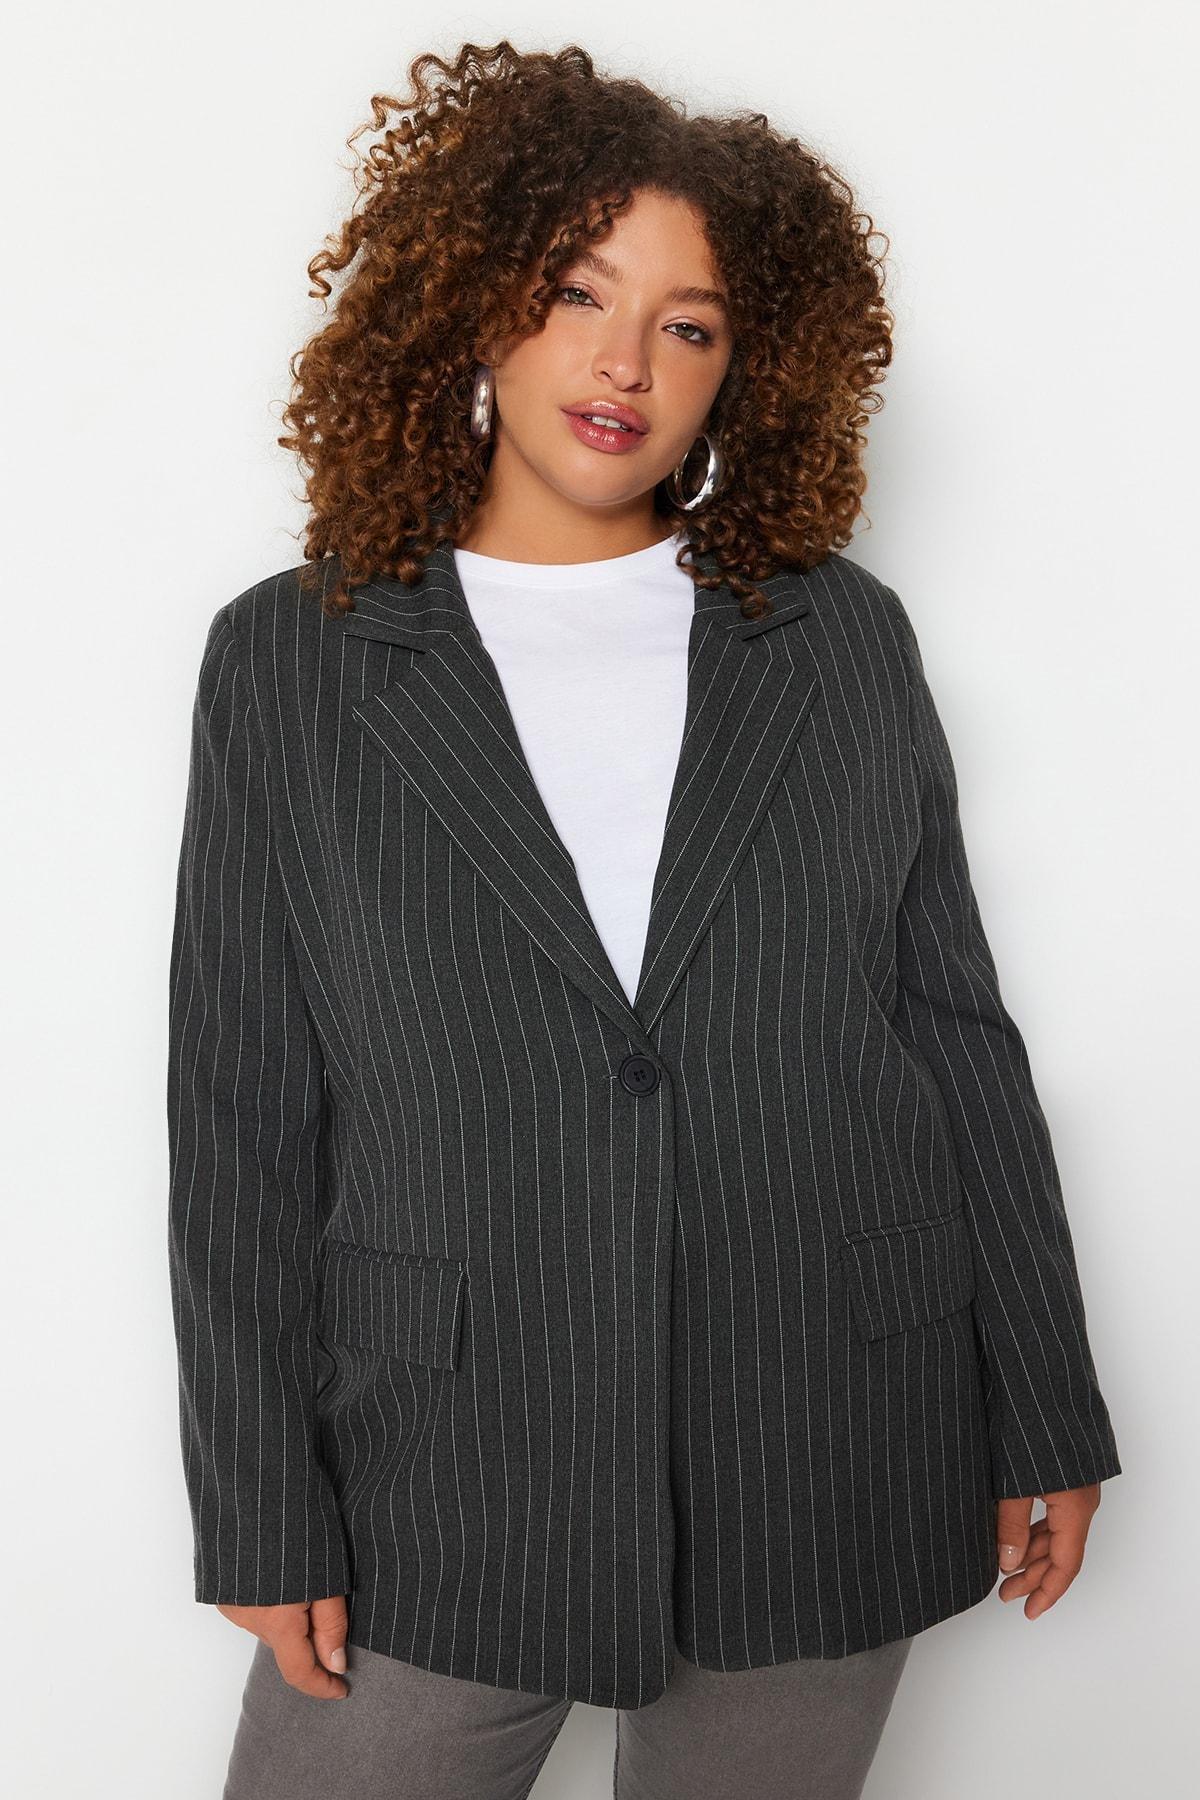 Trendyol - Black Striped Plus Size Jacket